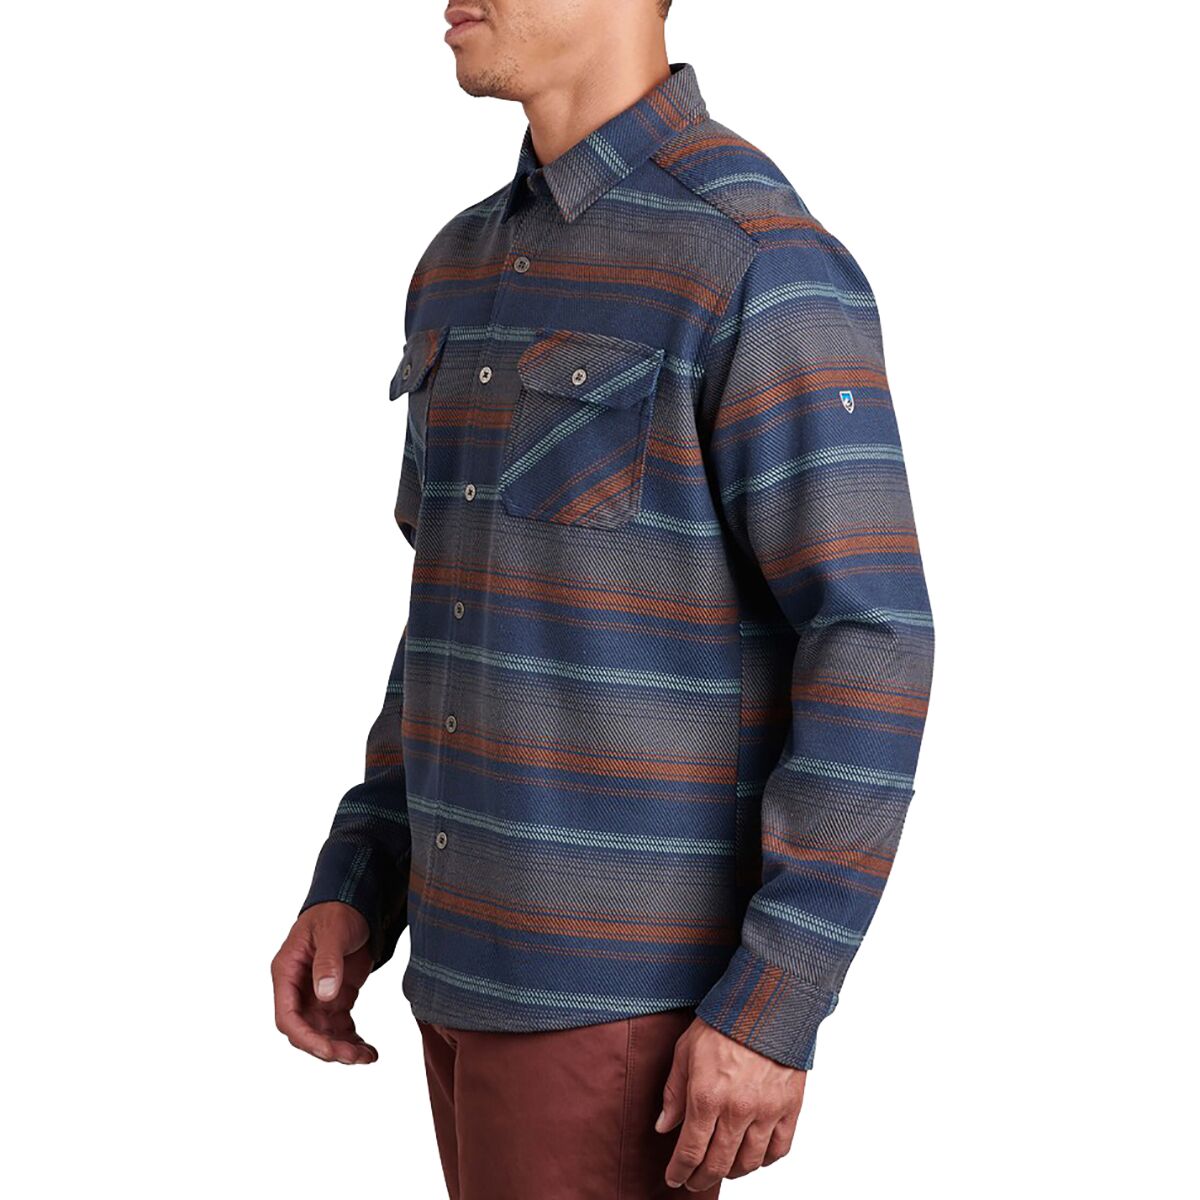 Disordr Flannel Shirt, Kuhl